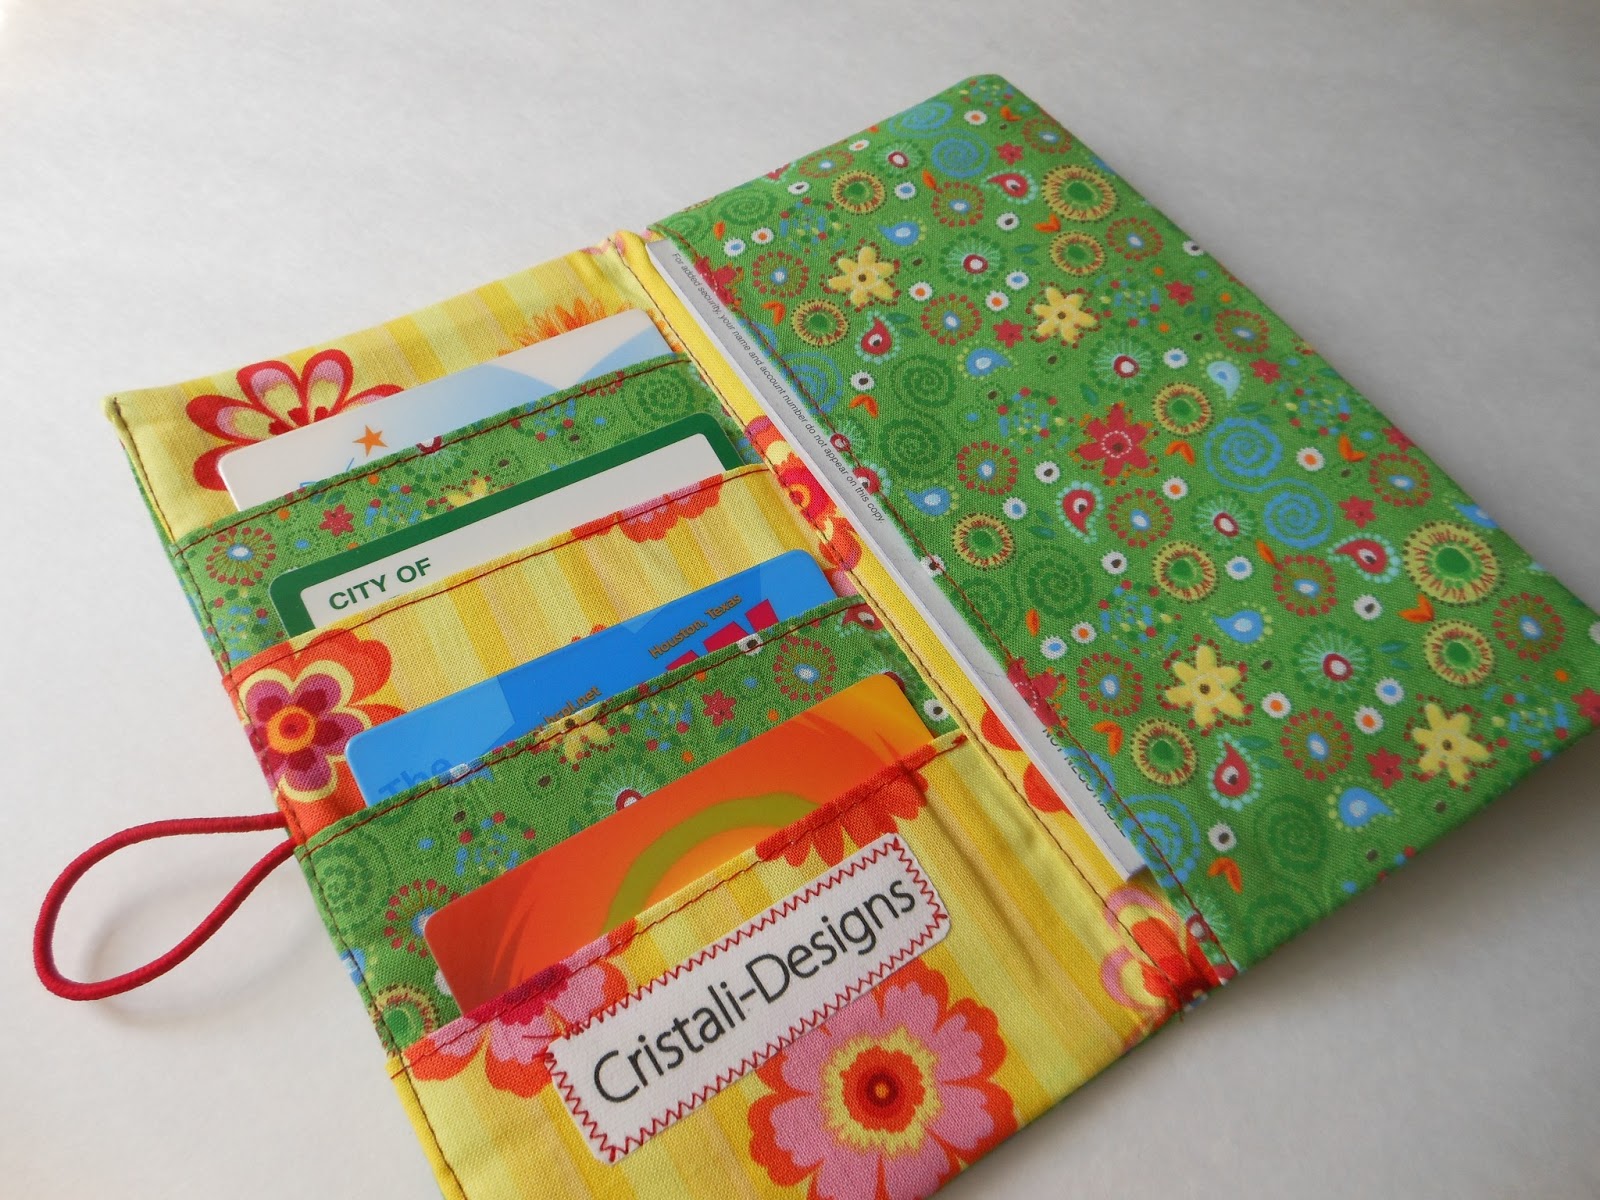 Cristali-Designs: Handmade wallet